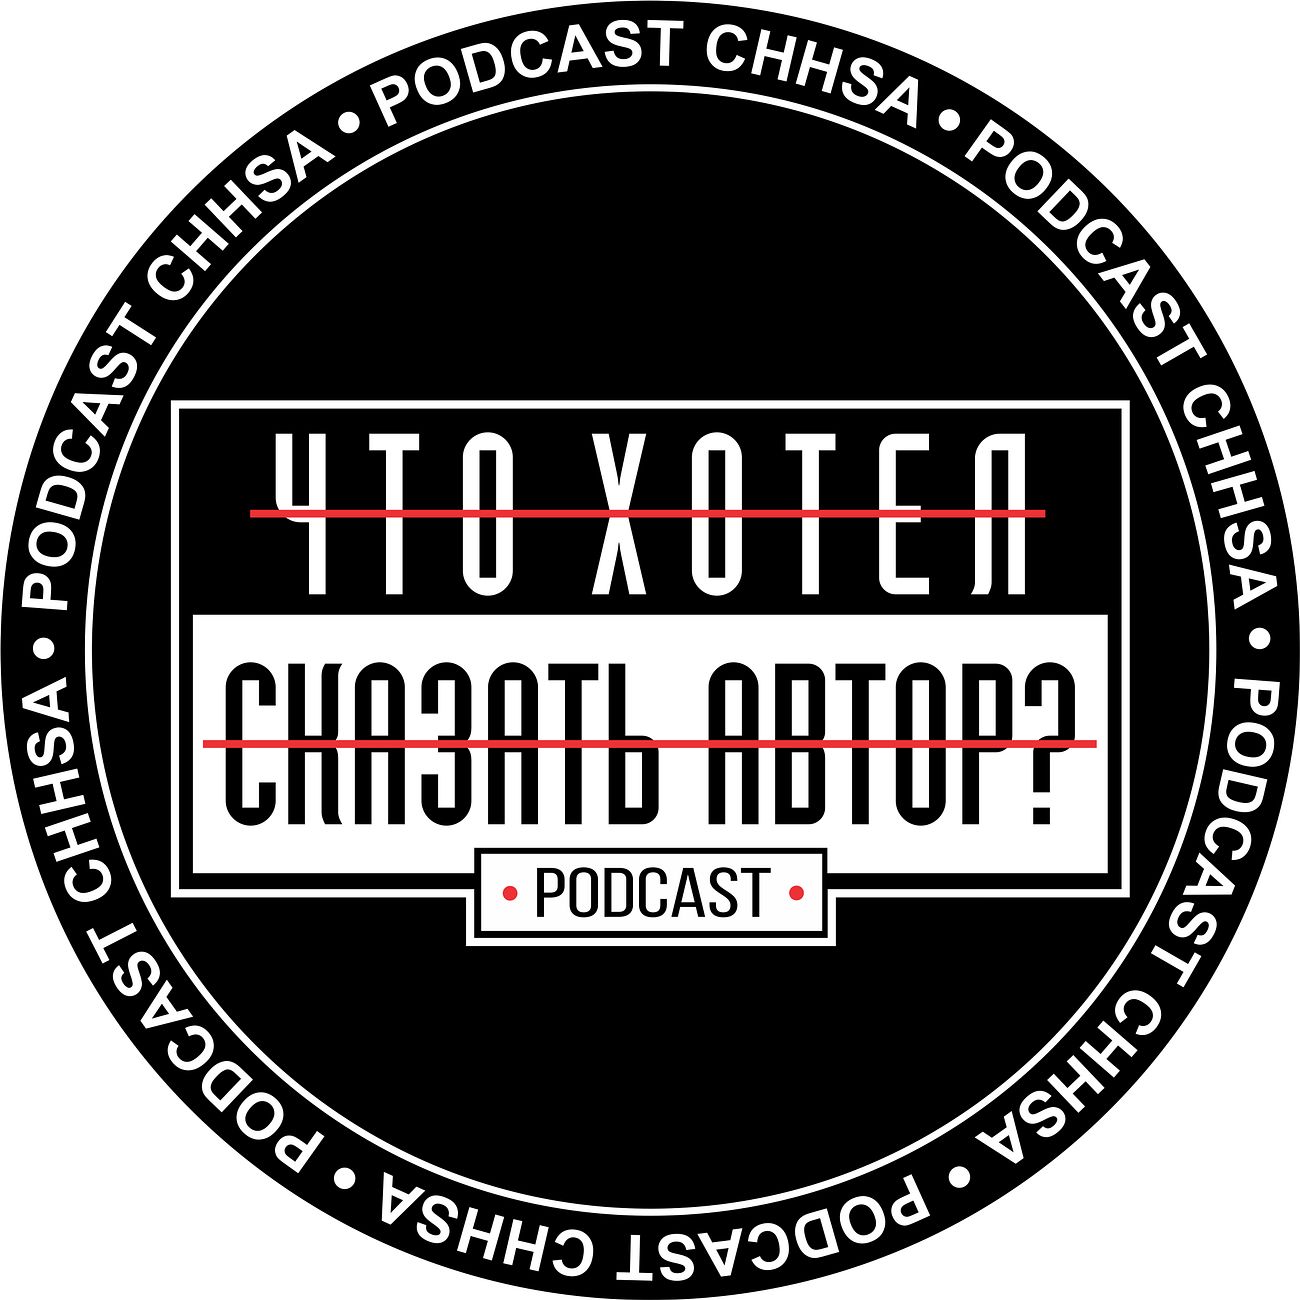 Podcast Chhsa "ЧТО ХОТЕЛ СКАЗАТЬ АВТОР?"